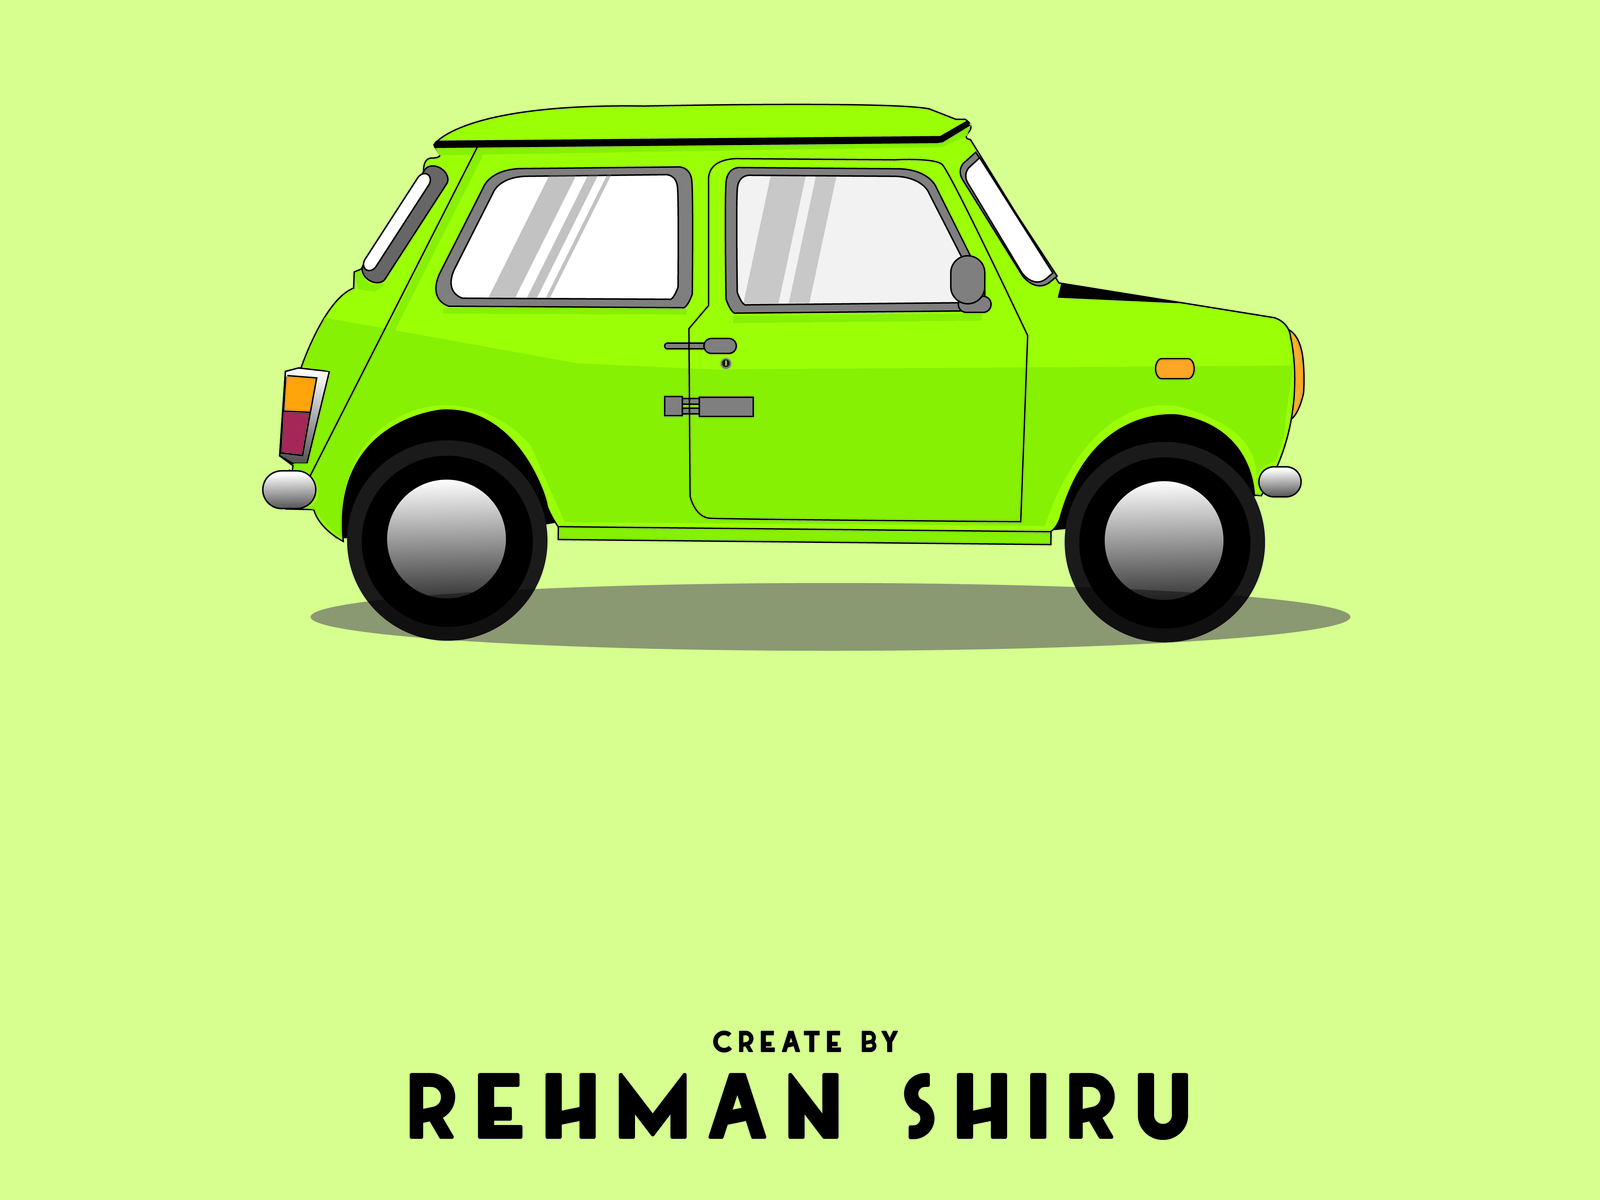 A MR.BEAN CAR by Rehman Shiru on Dribbble